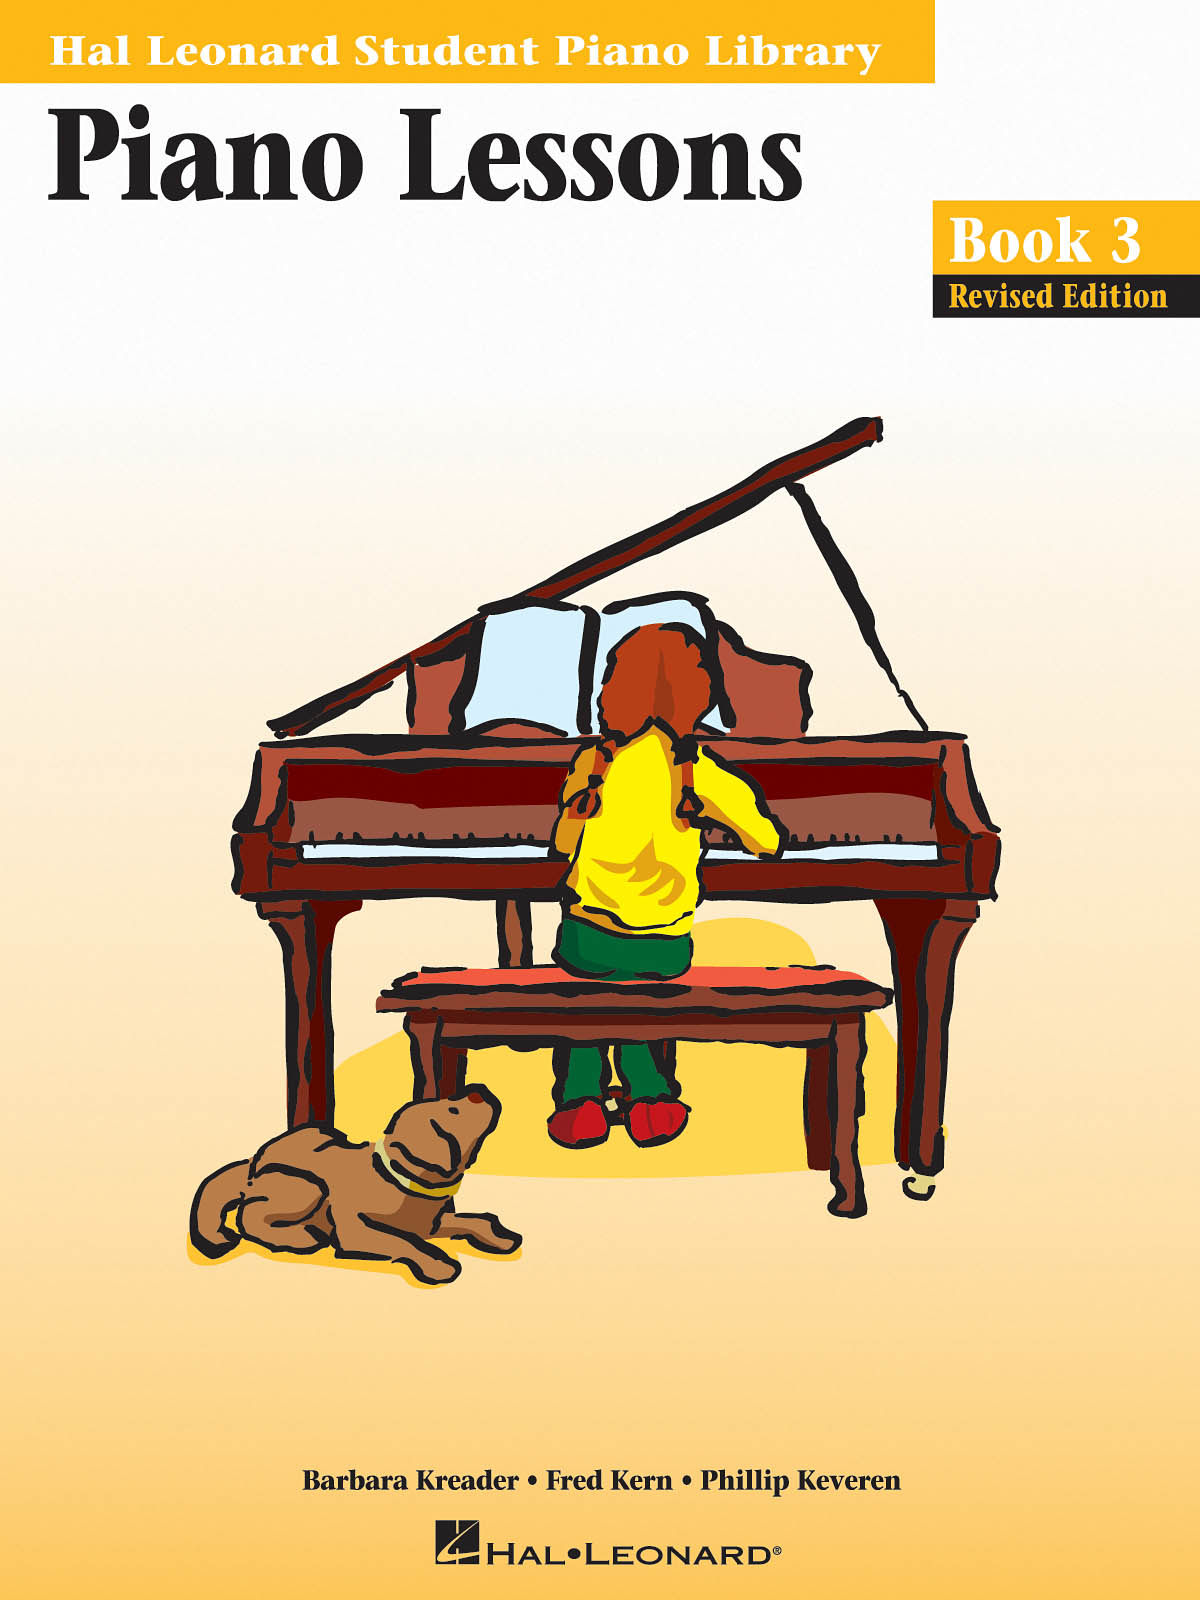 Piano Lessons Book 3 - Revised Edition - Hal Leonard Student Piano Library - pro klavír